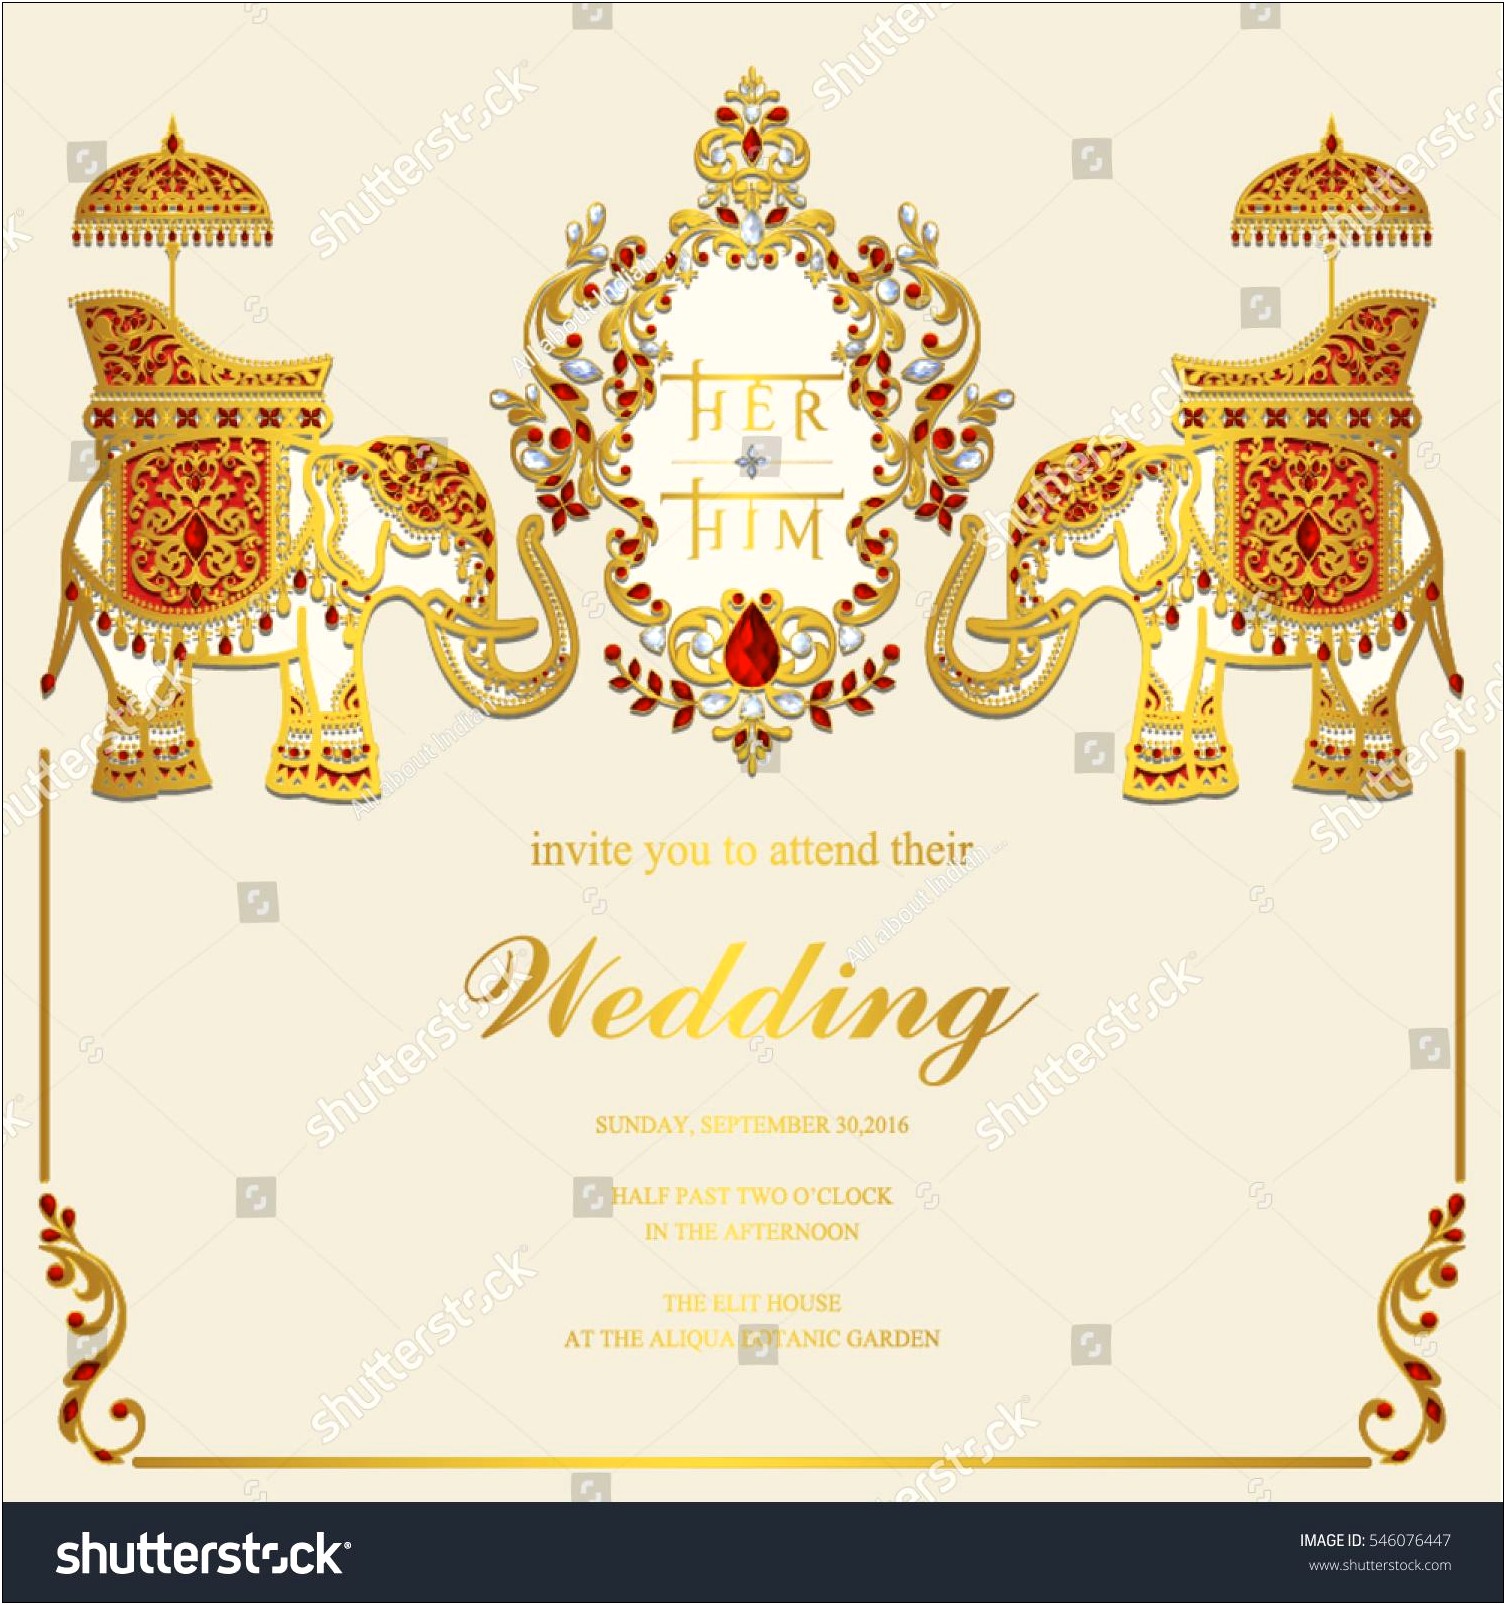 Indian Wedding Invitation Card Free Template